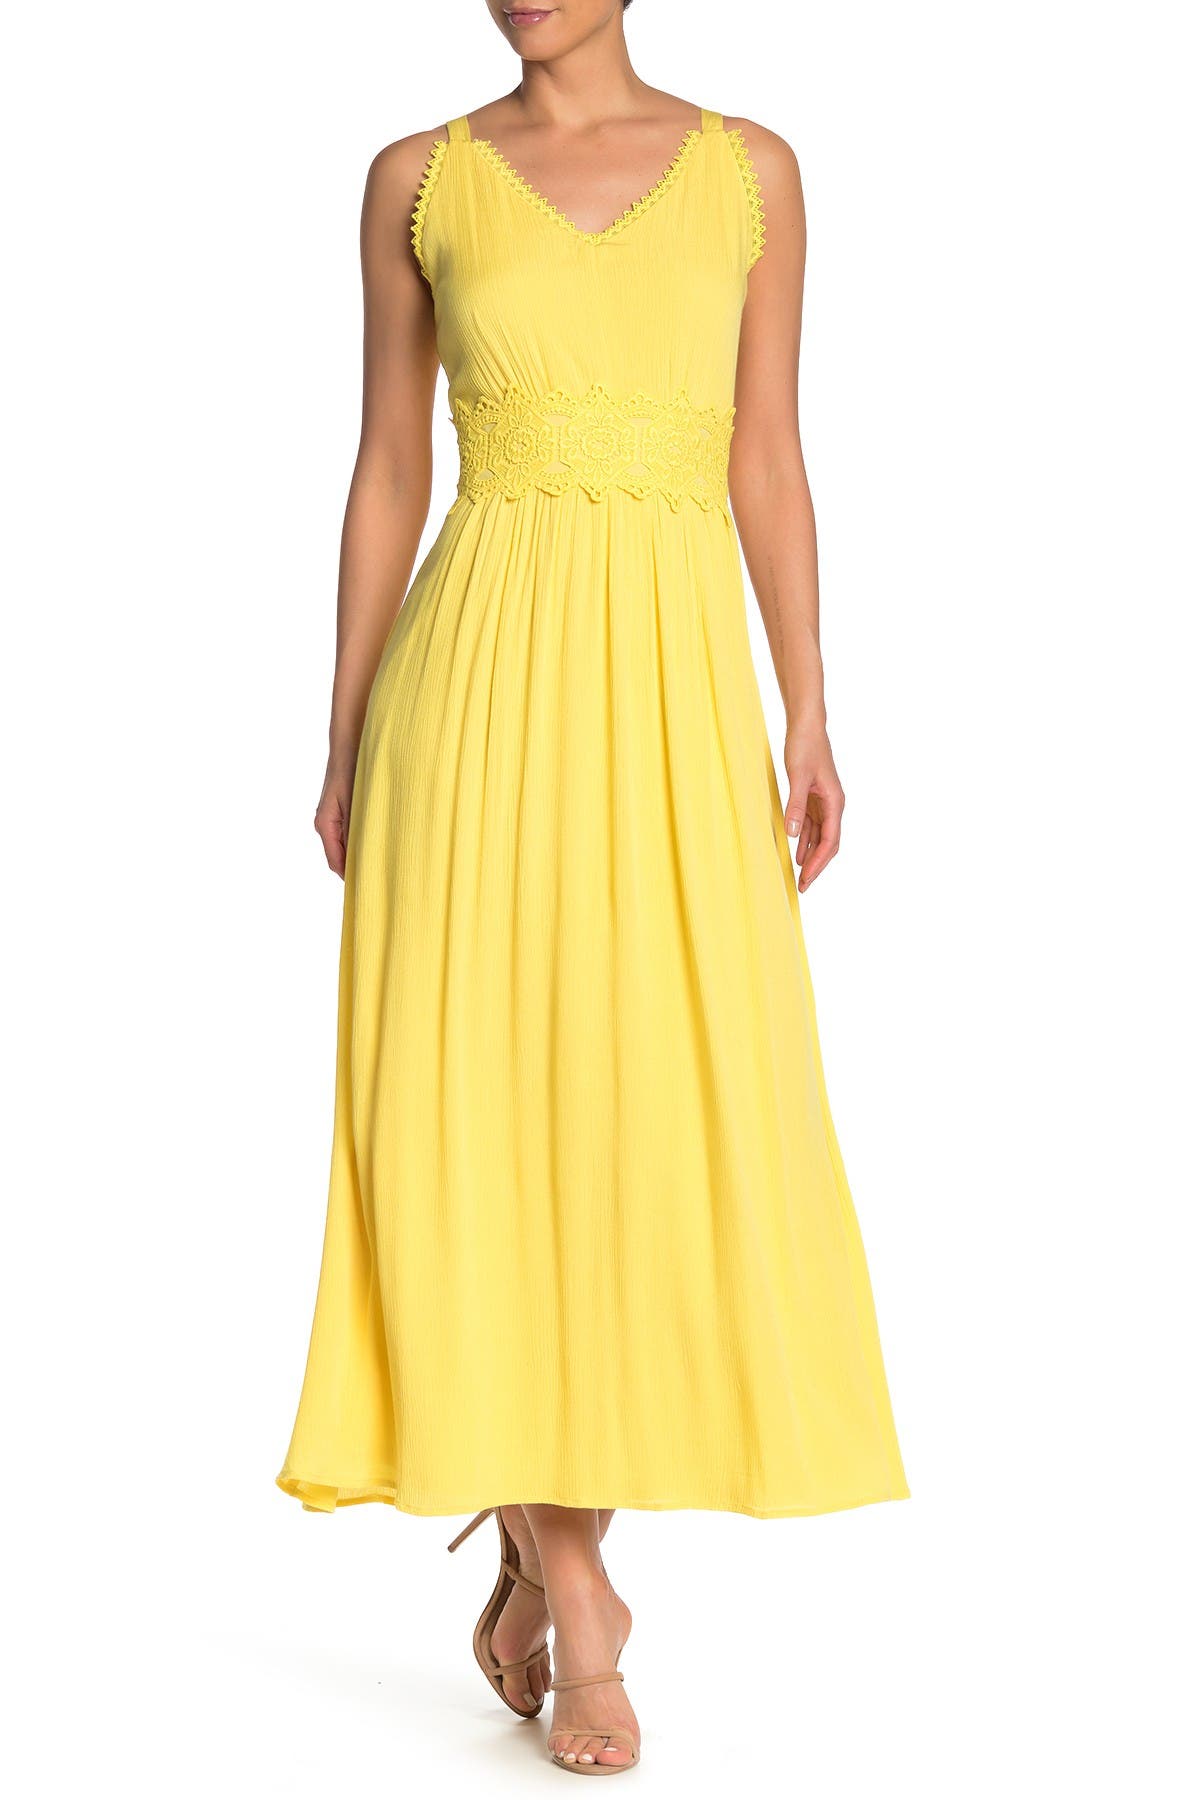 womens yellow dress